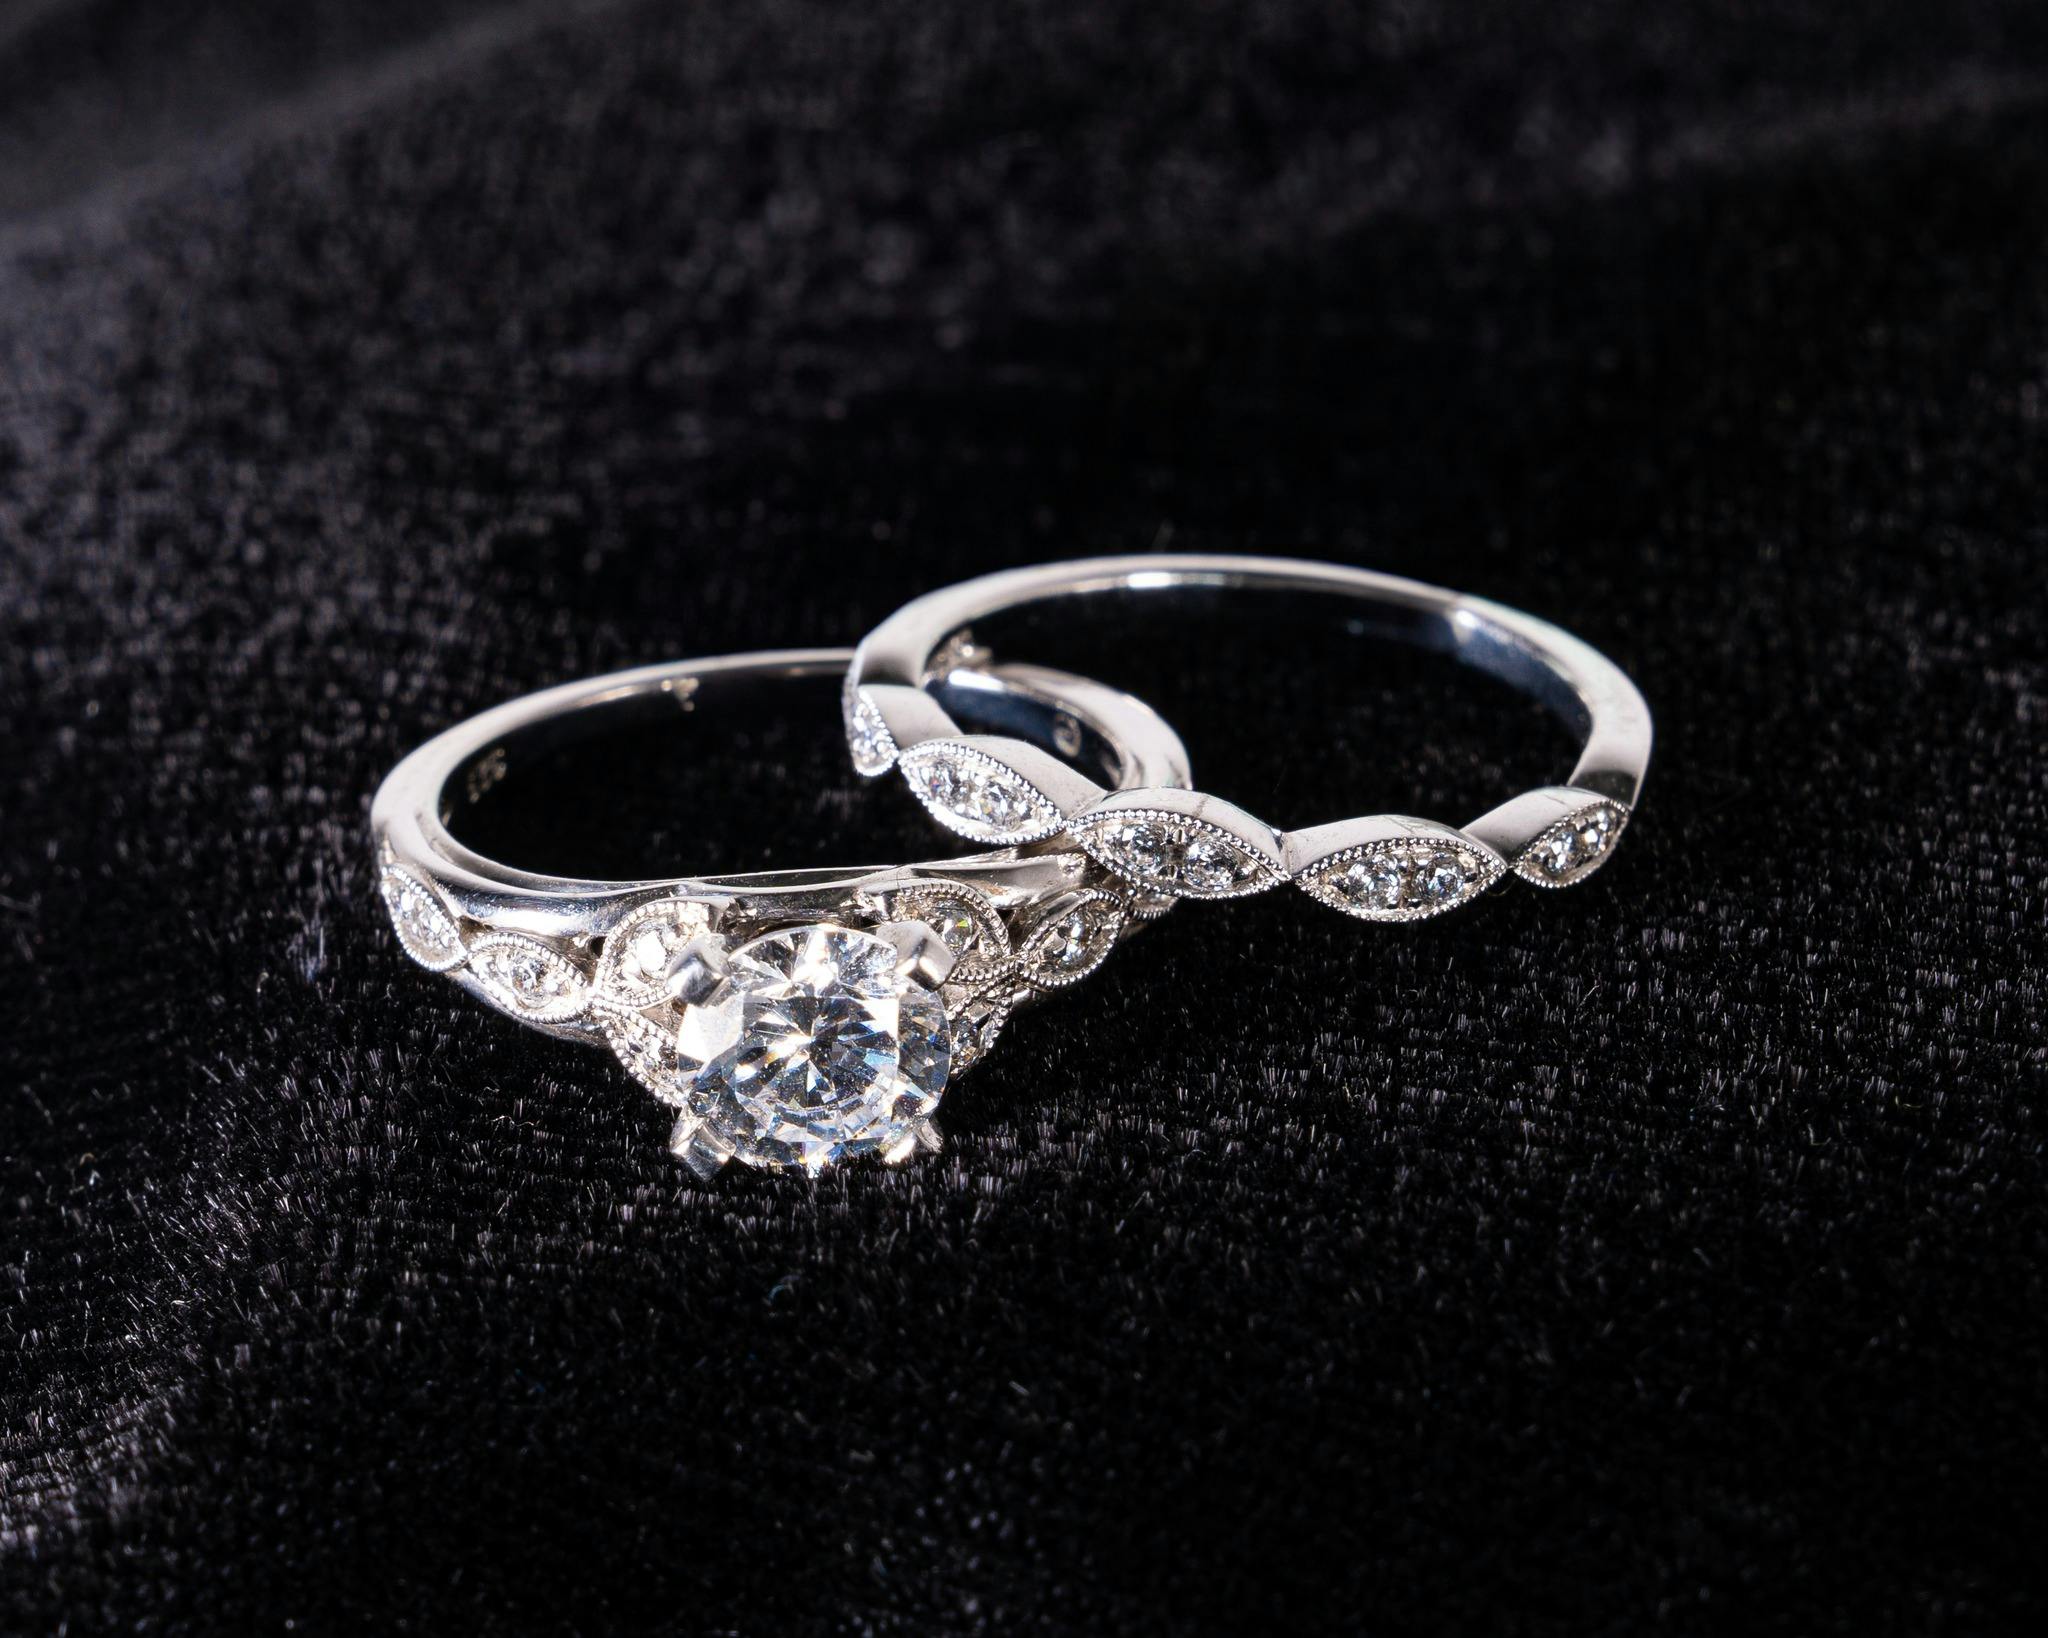 Clean diamond engagement ring